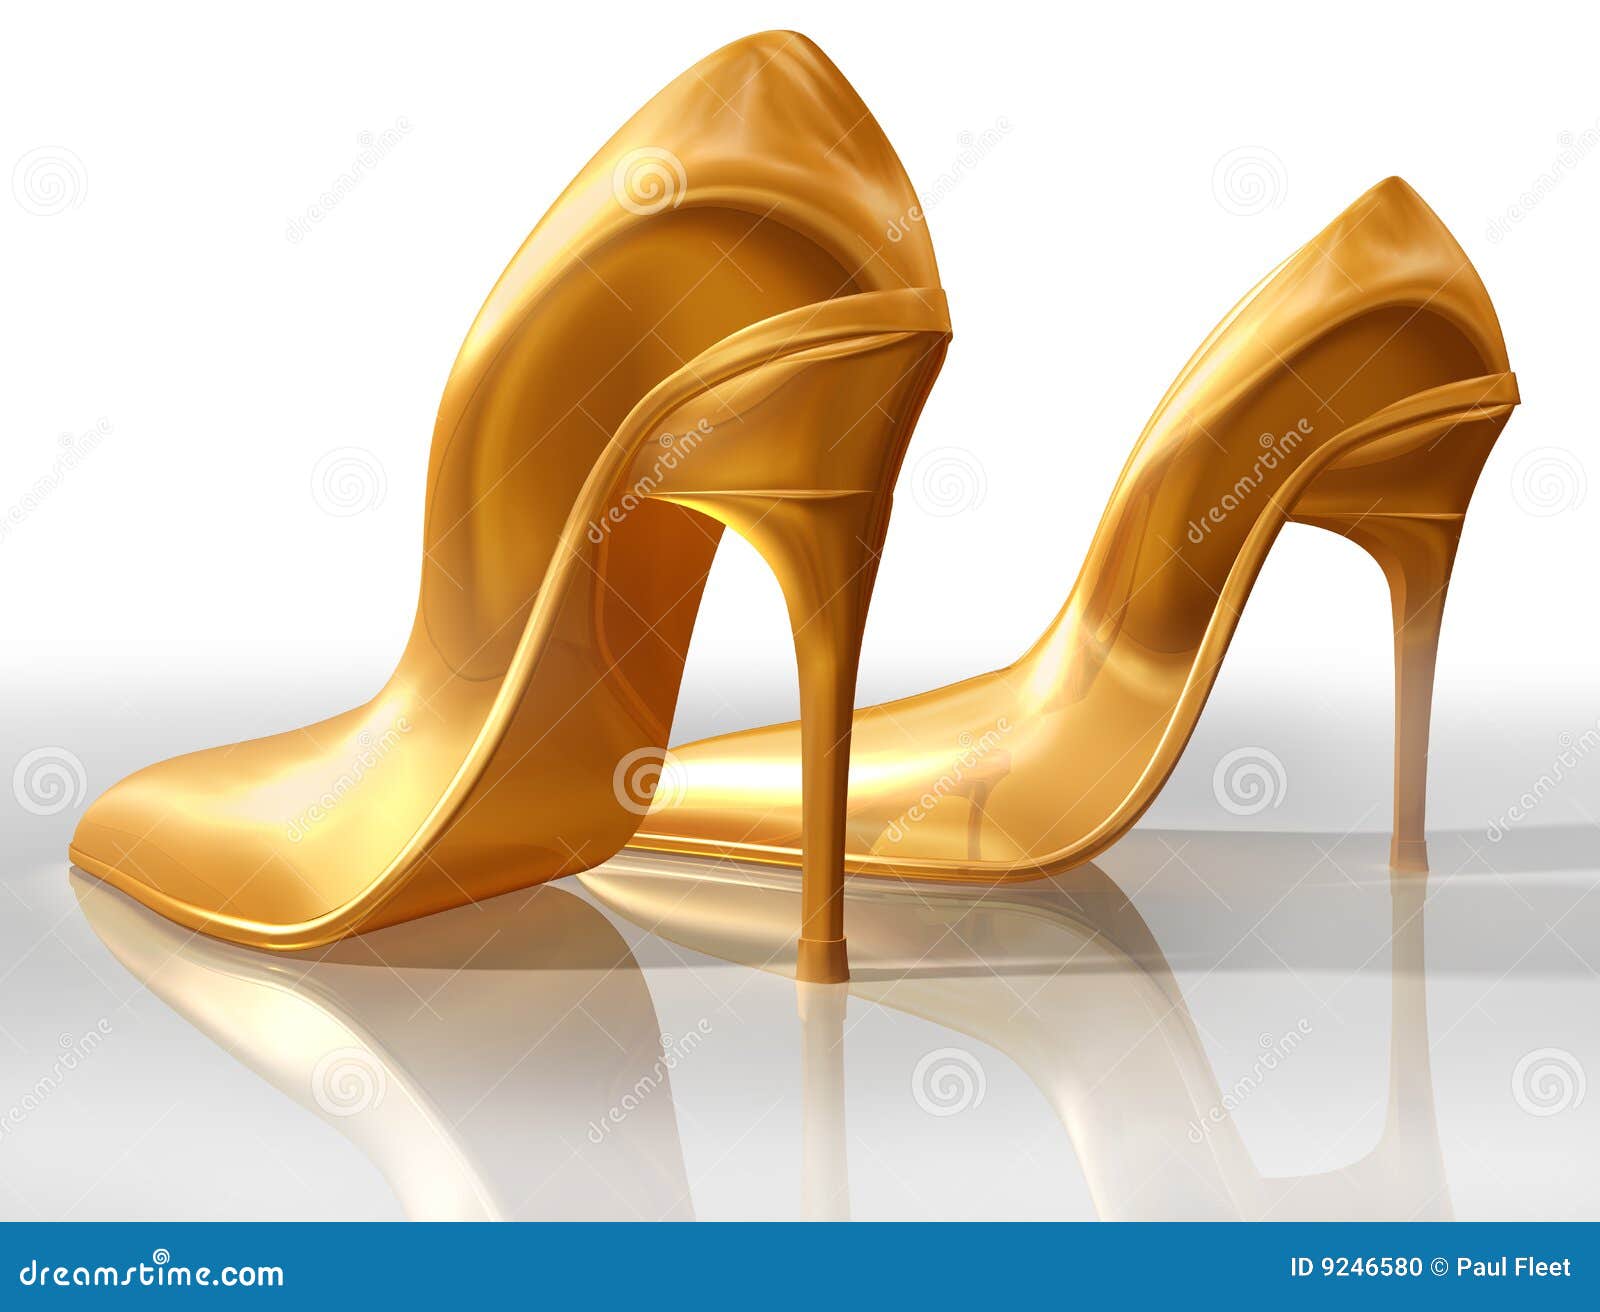 Elegant black high heels with wooden platform and peep toe design on Craiyon